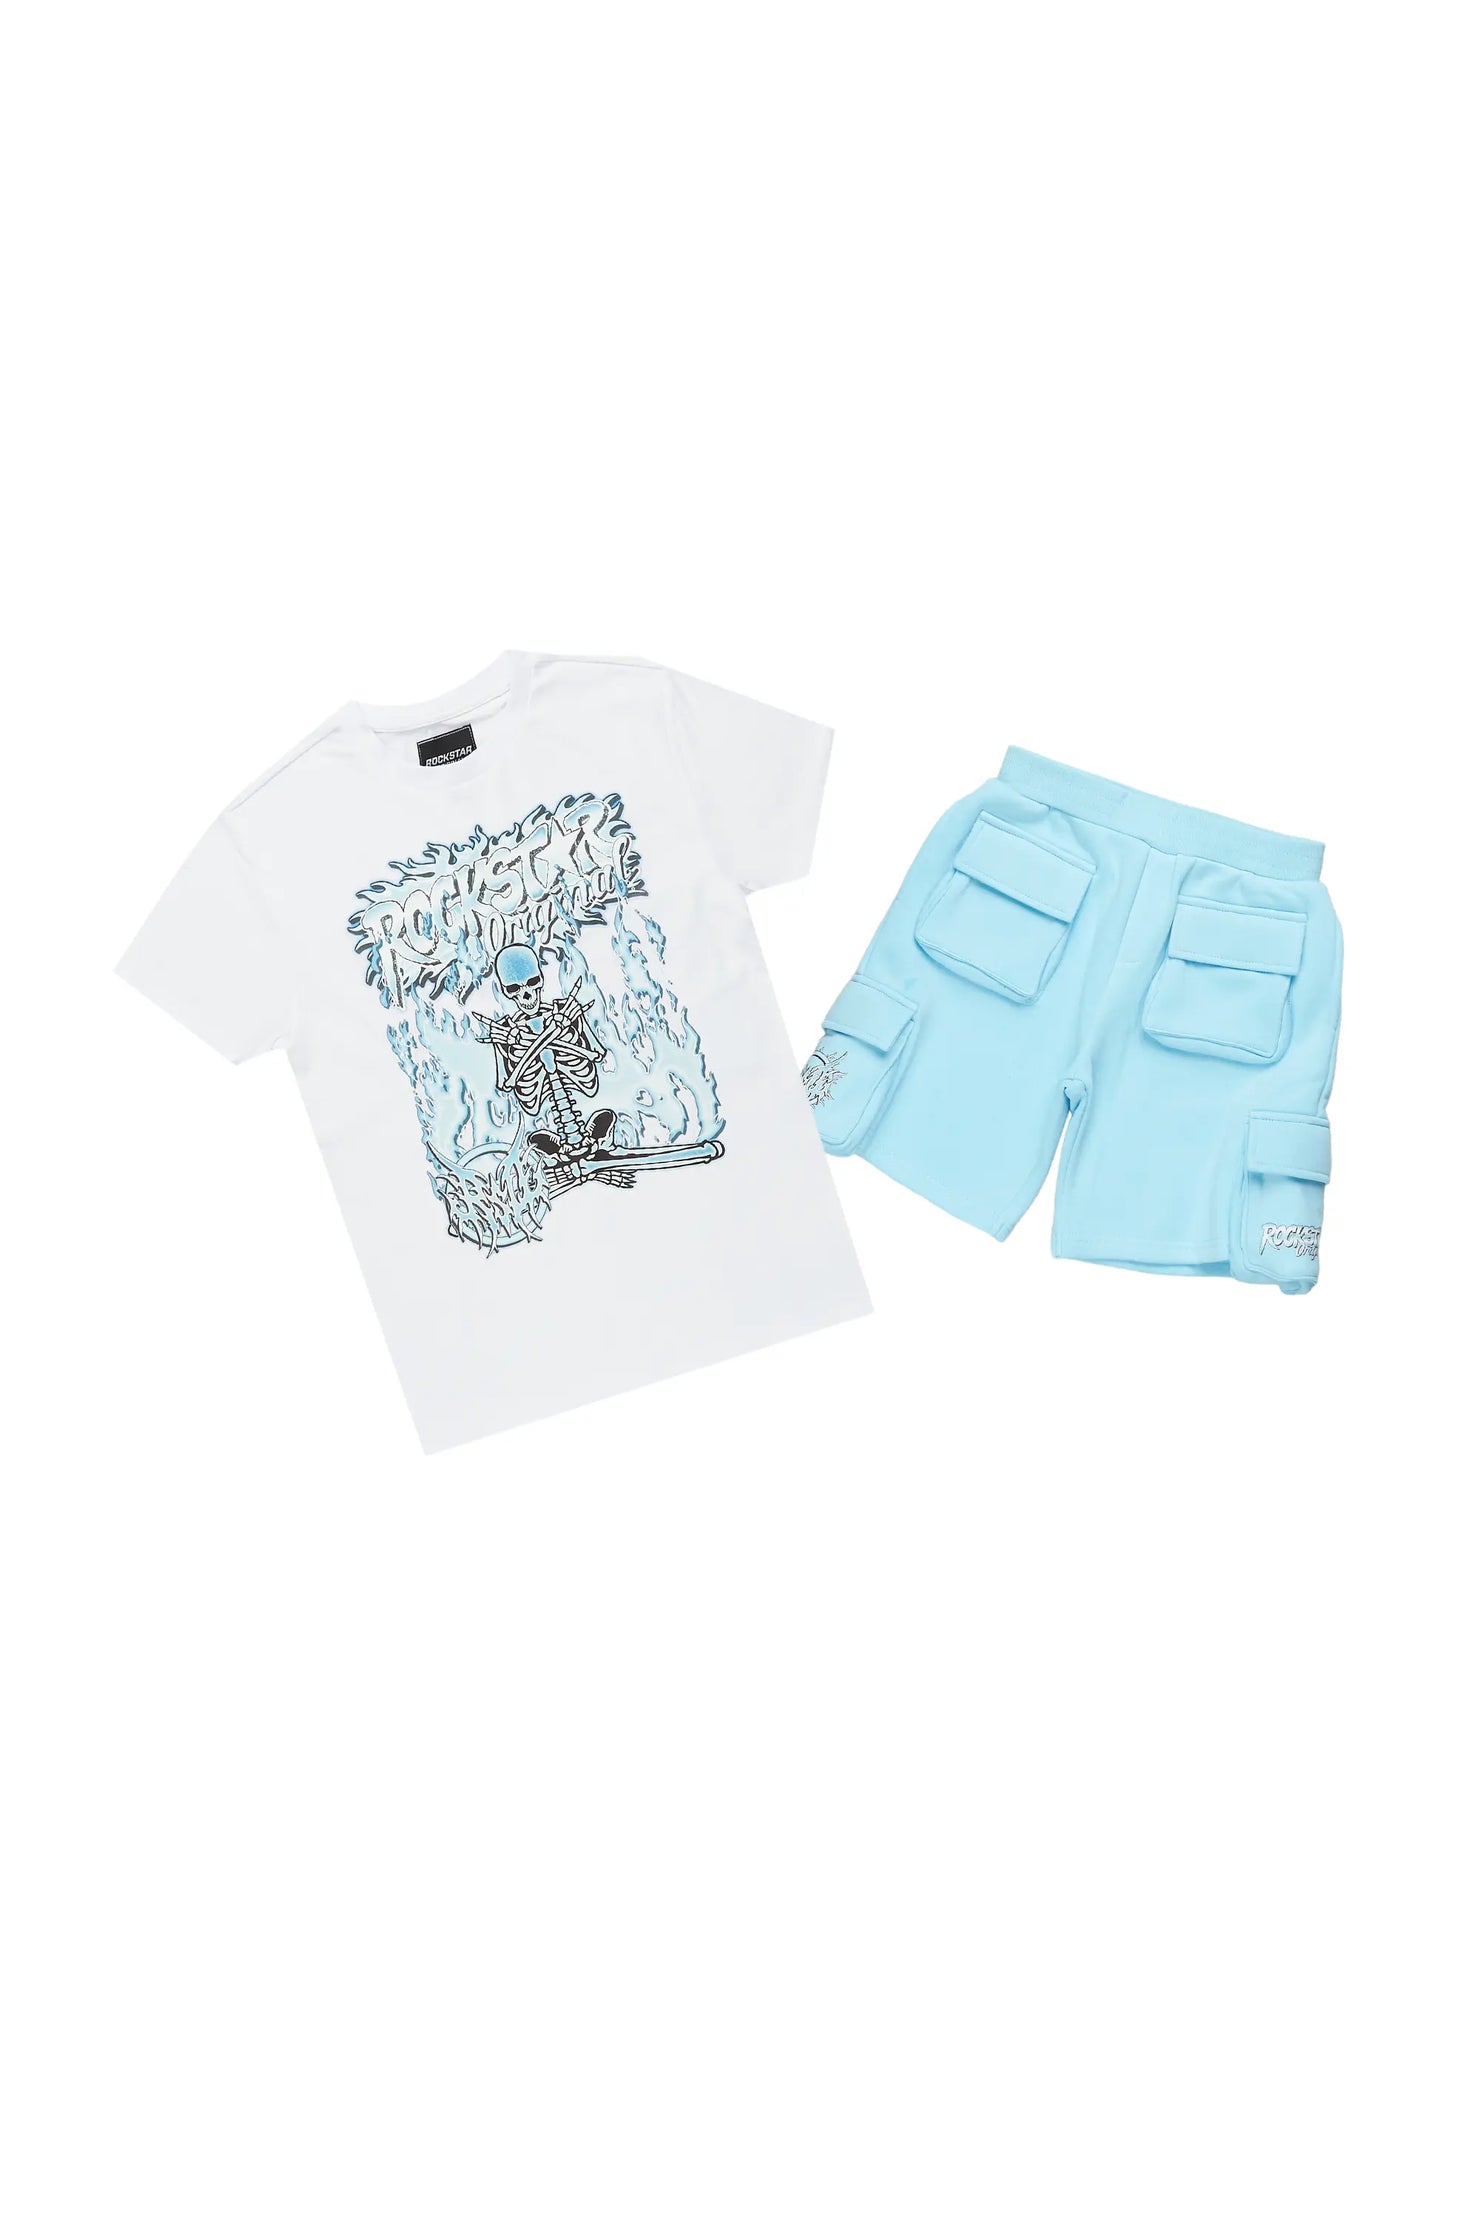 Boys Yoga White/Blue T-Shirt Short Set